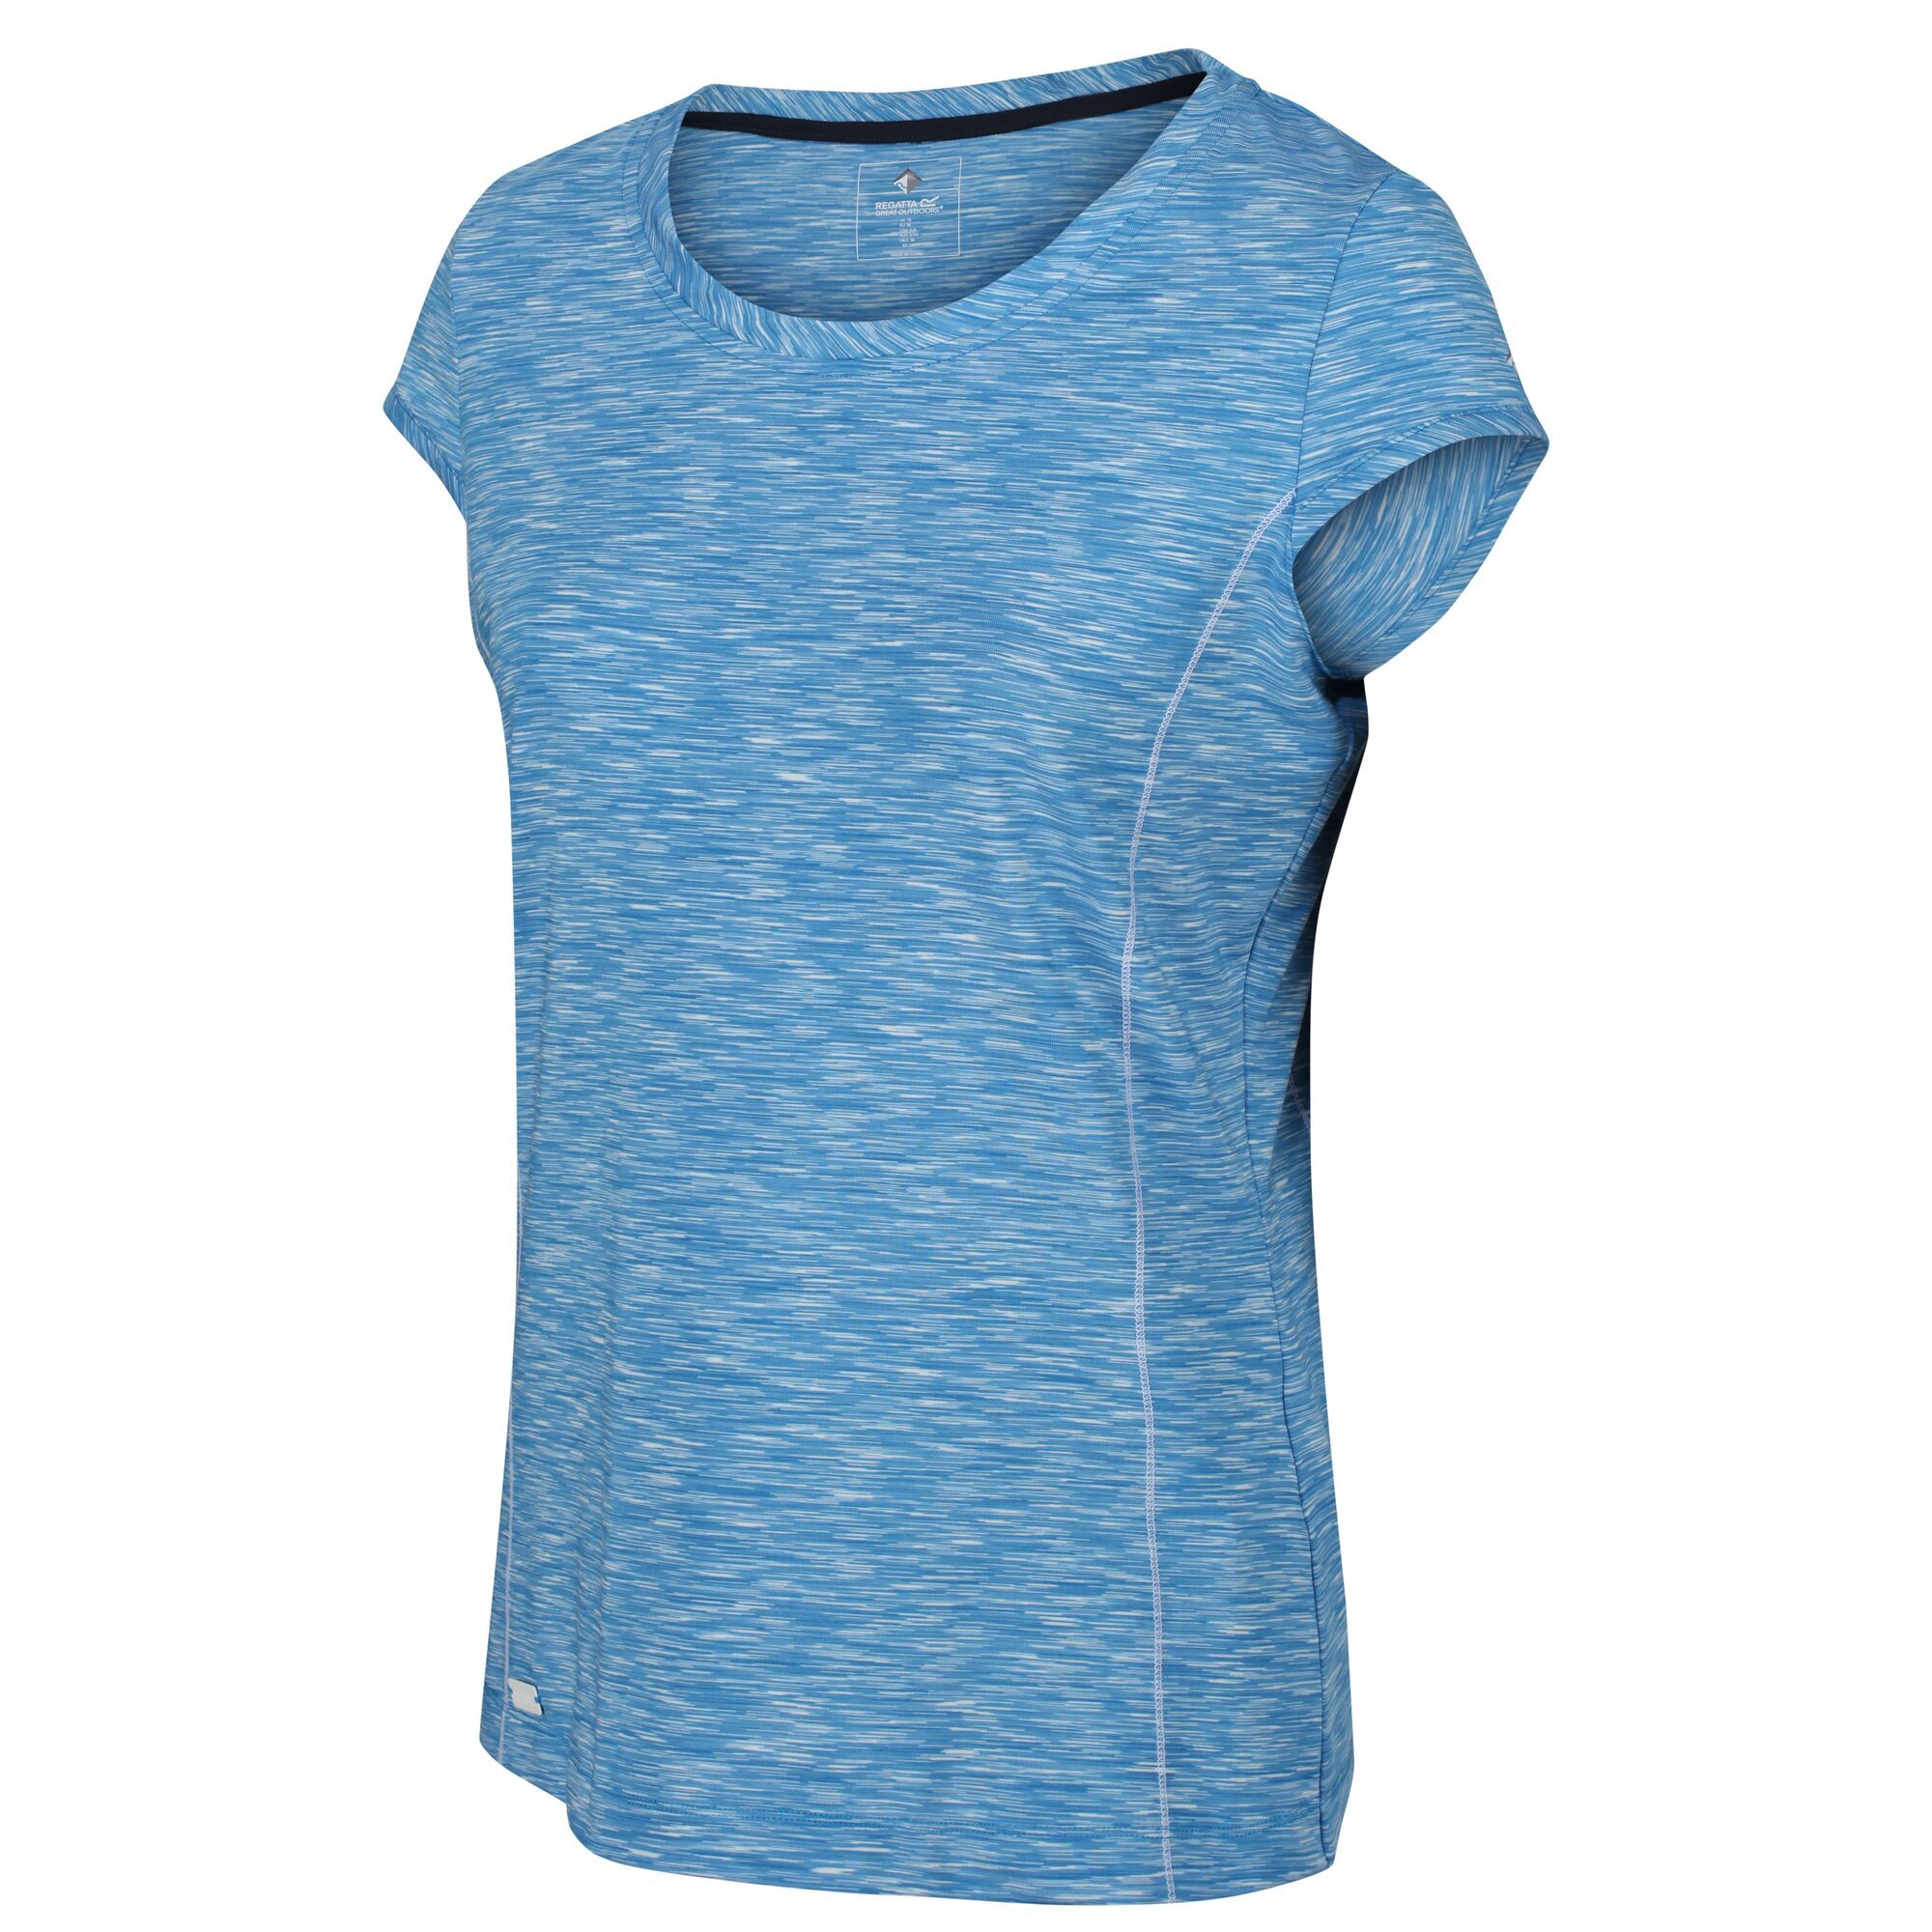 Women's Hyperdimension Quick Dry T-Shirt Blue Aster